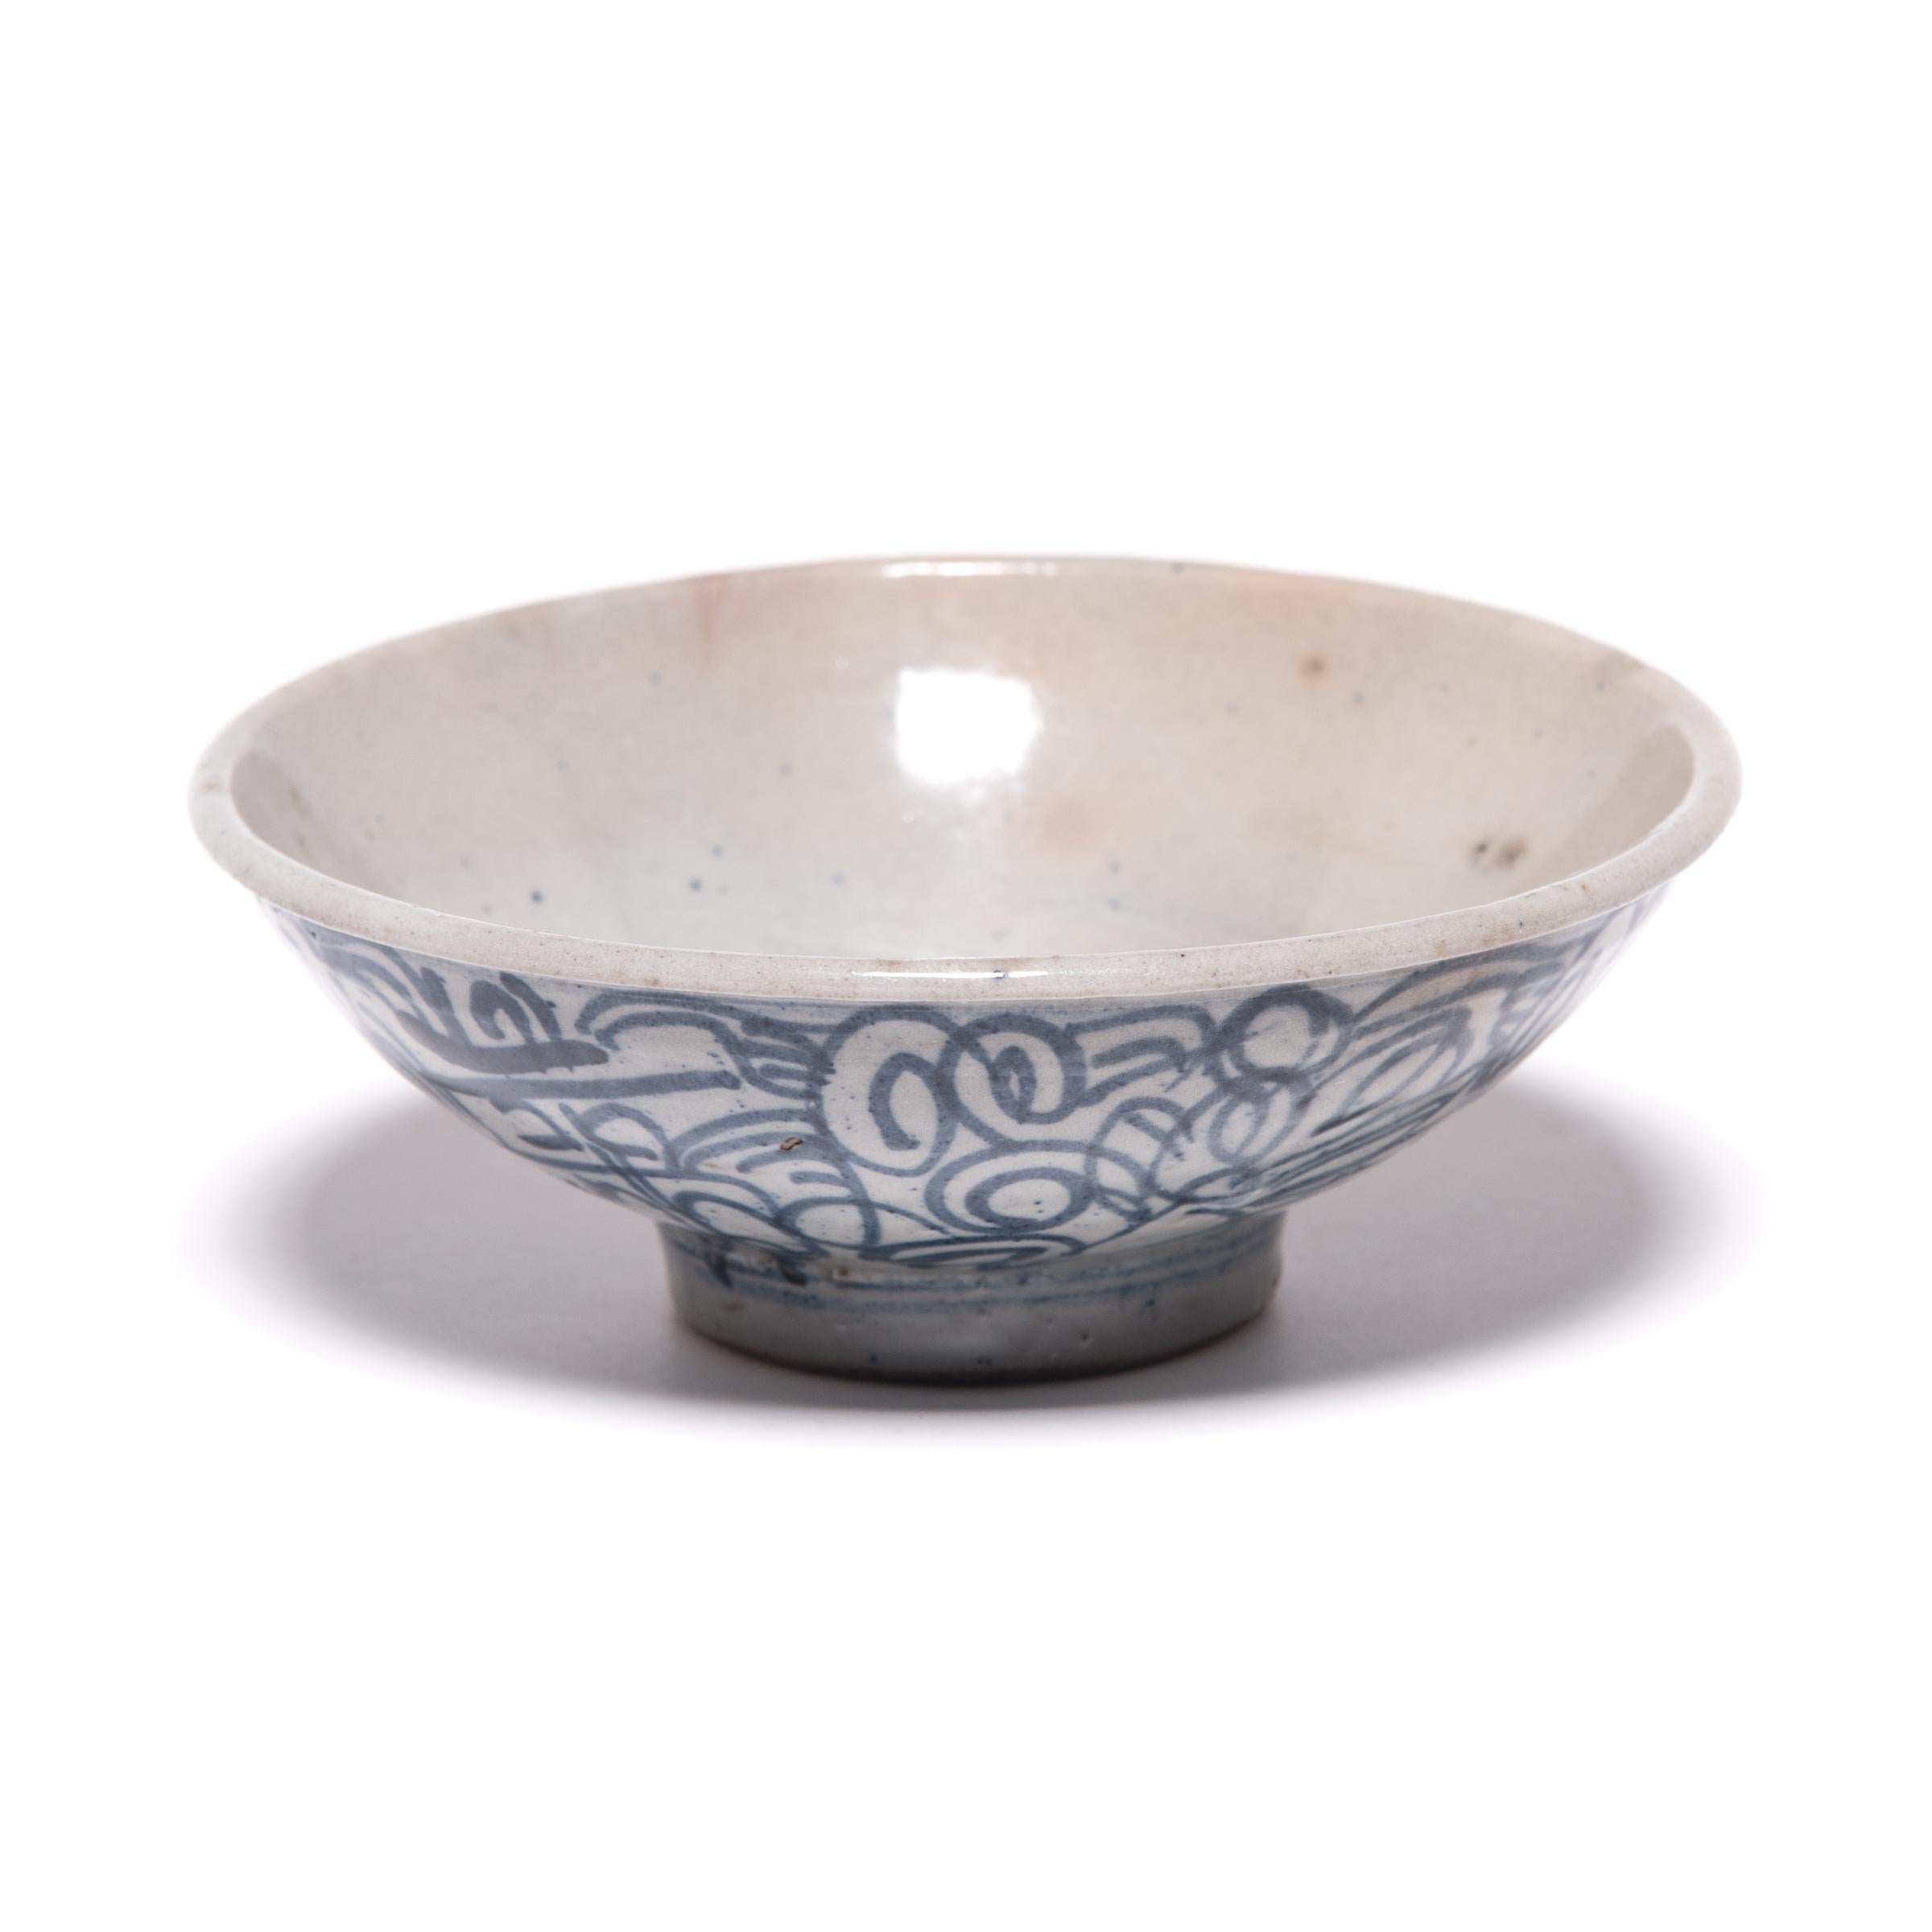 Glazed Chinese Blue and White Rice Bowl, c. 1900